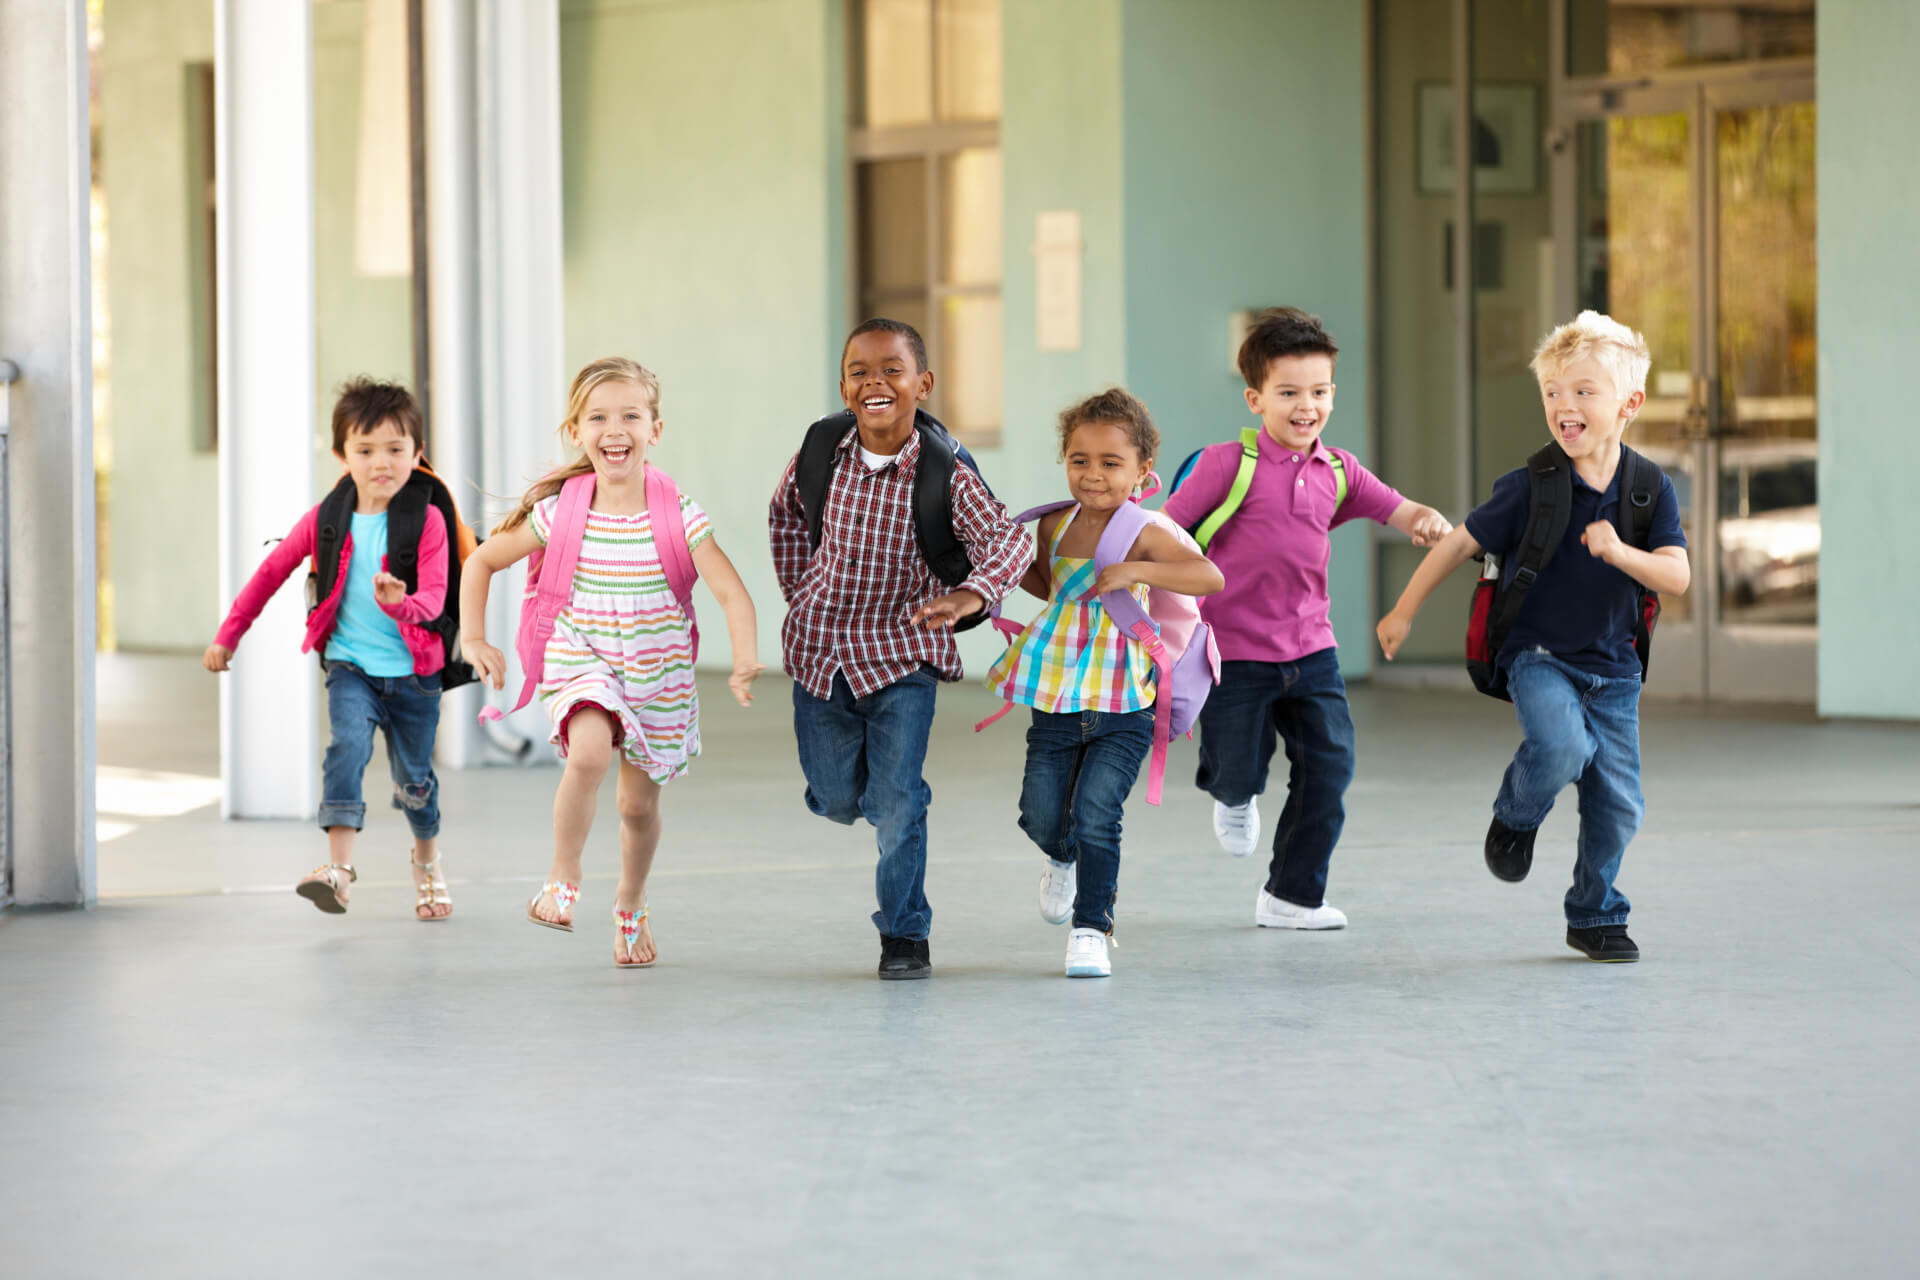 Group of elementary age schoolchildren running outside